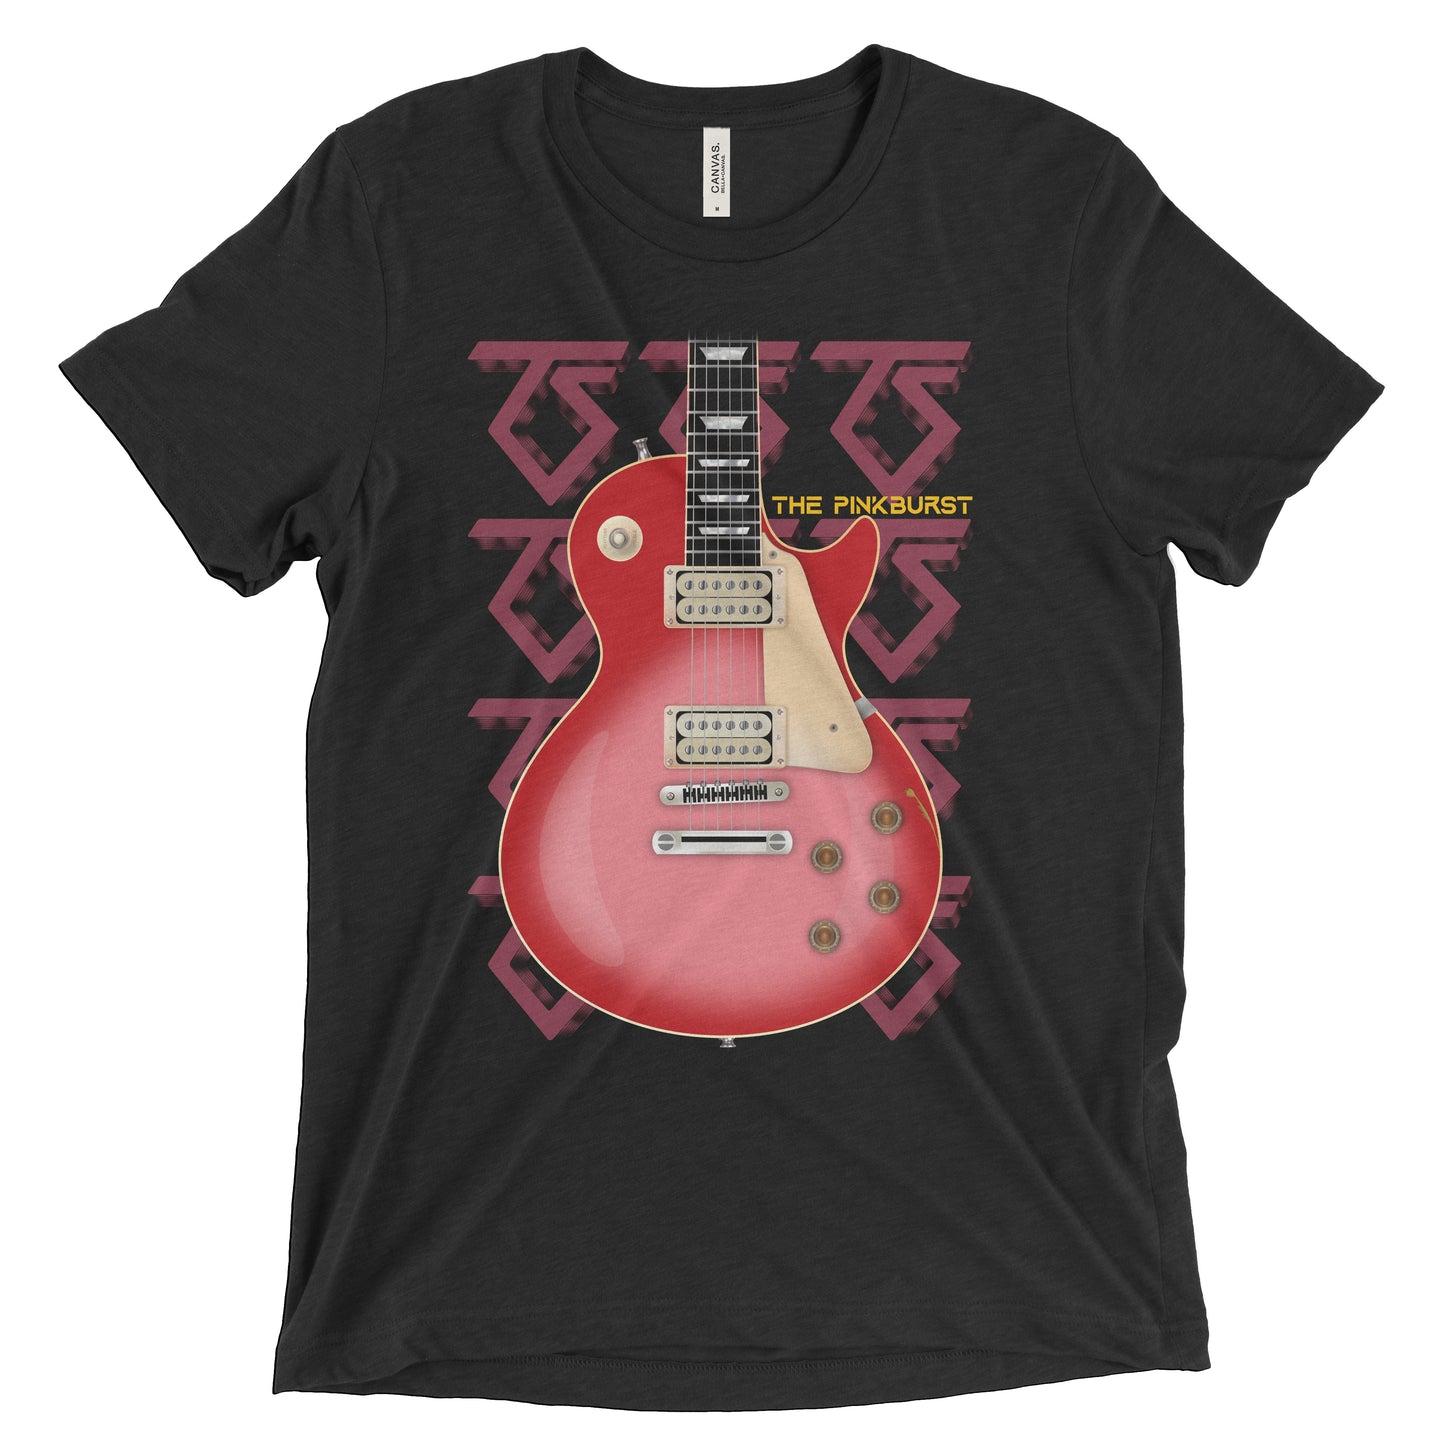 The Pinkburst Guitar Tee